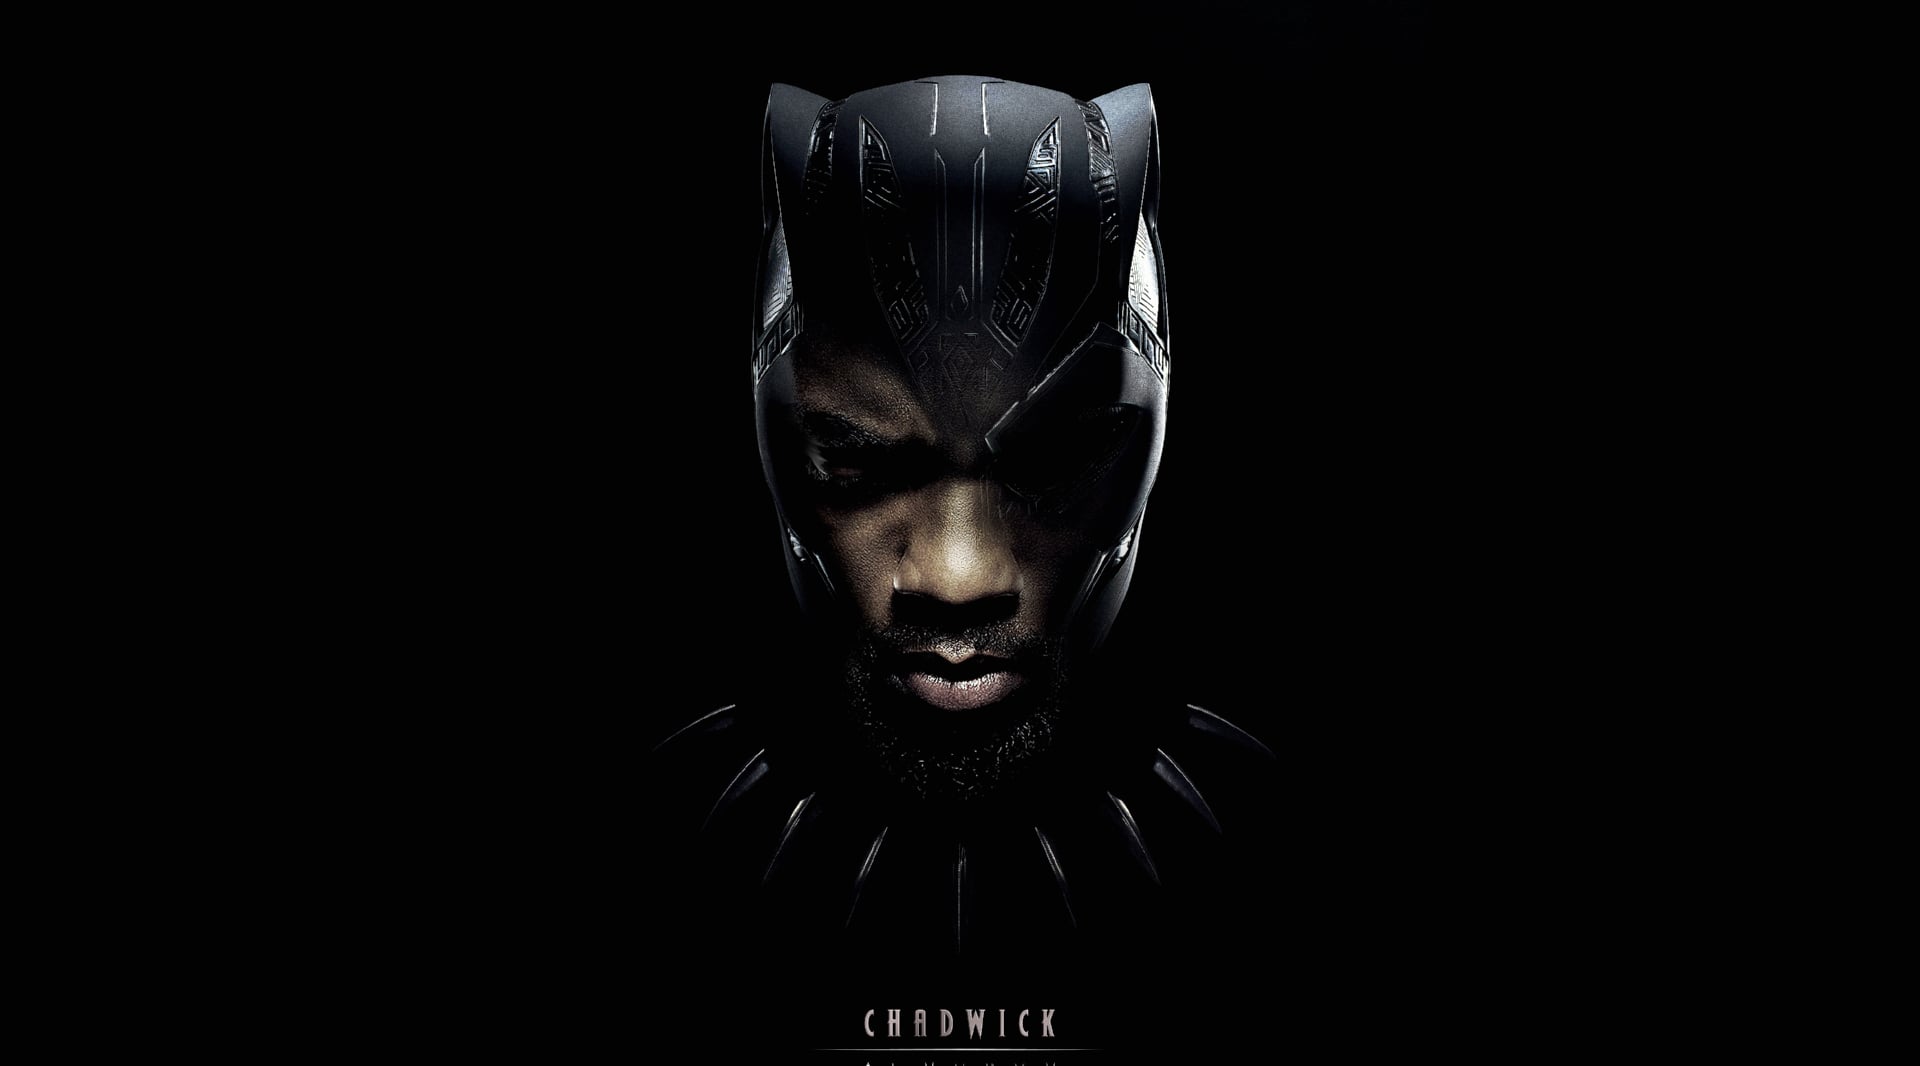 Chadwick Boseman as Black Panther wallpapers HD quality